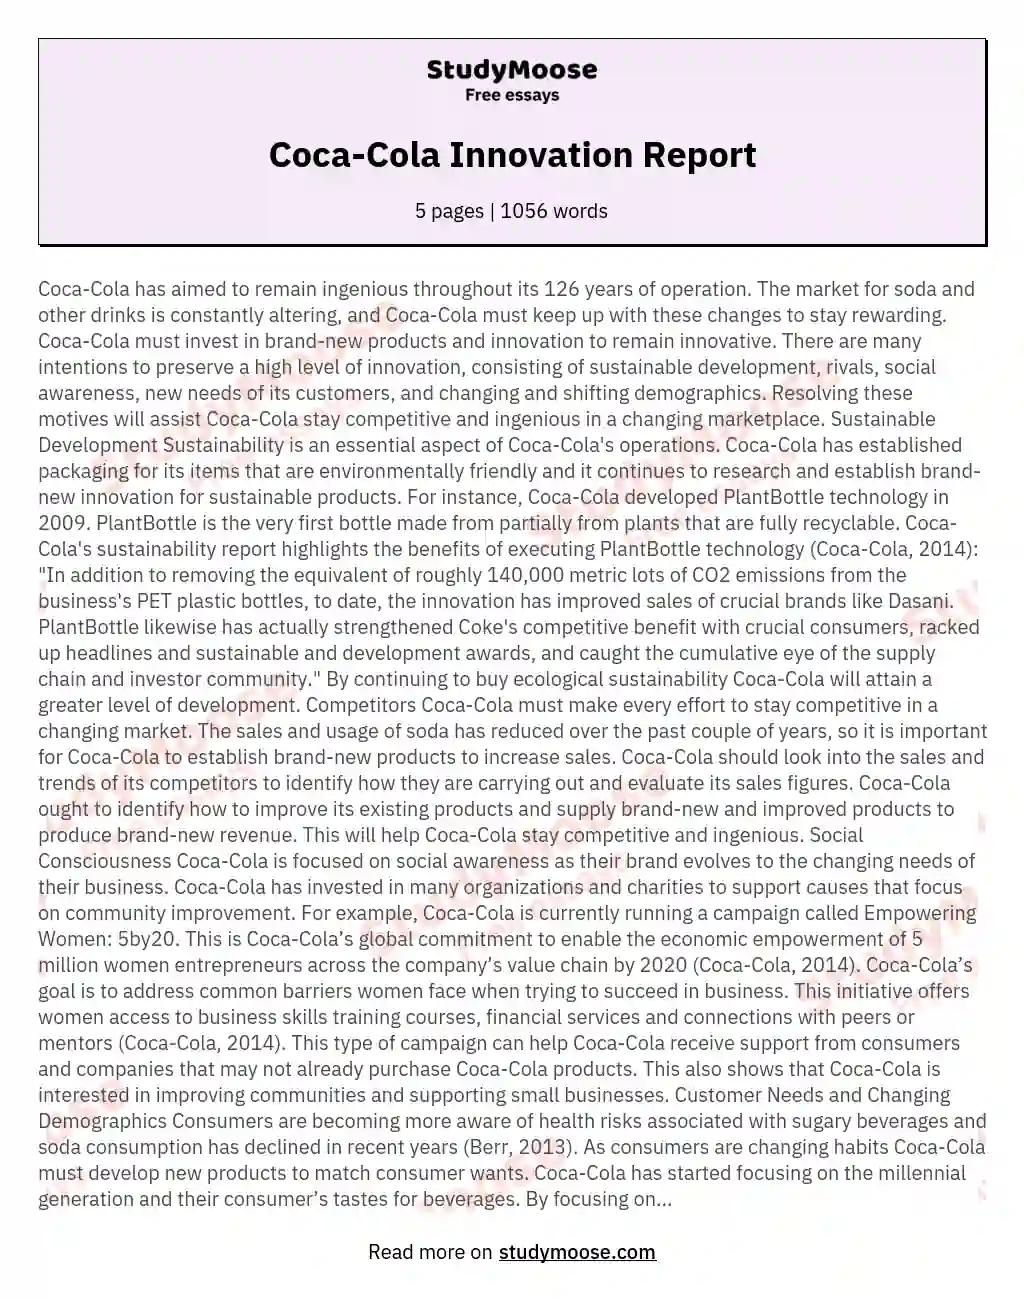 Coca-Cola Innovation Report essay